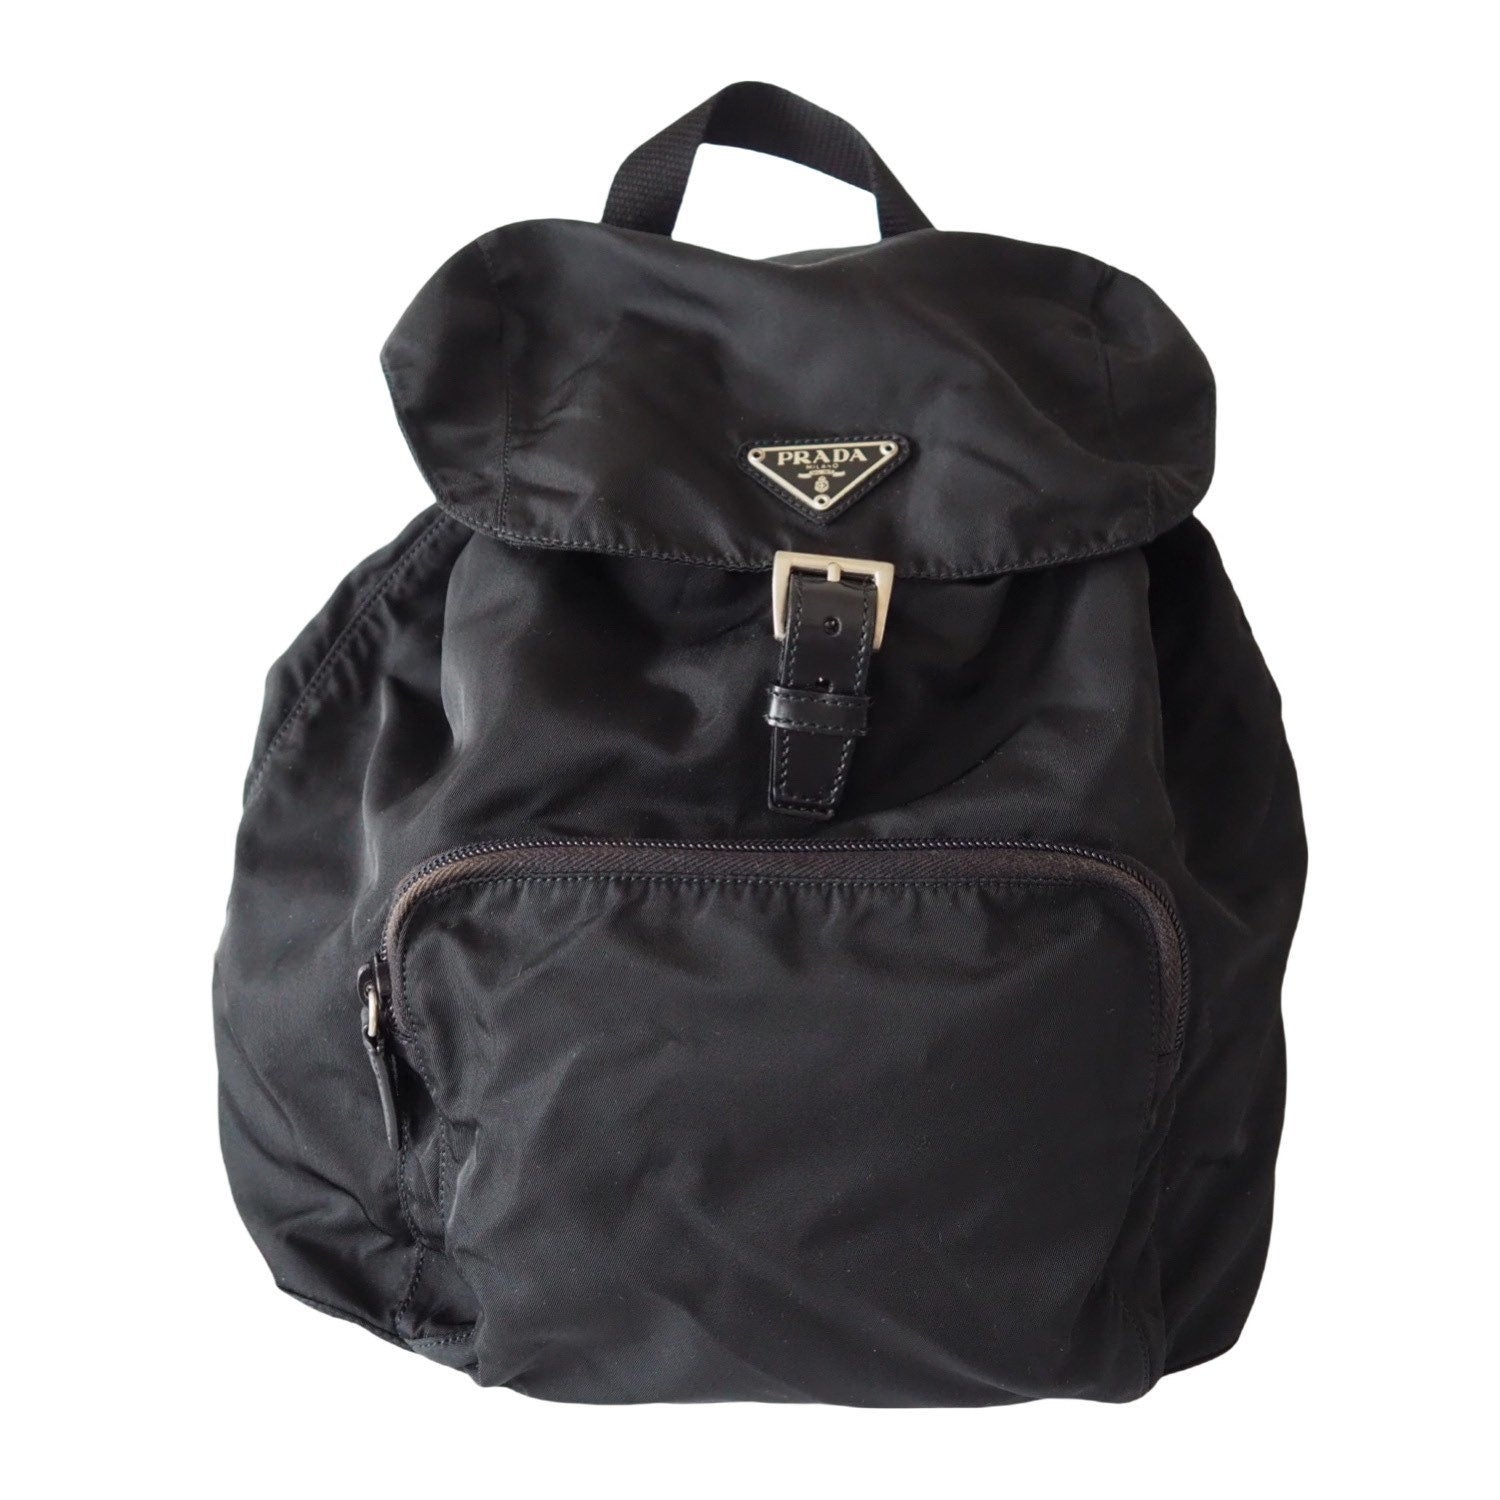 PRADA Nylon Leather Backpack Bag Black Logo Purse Authentic